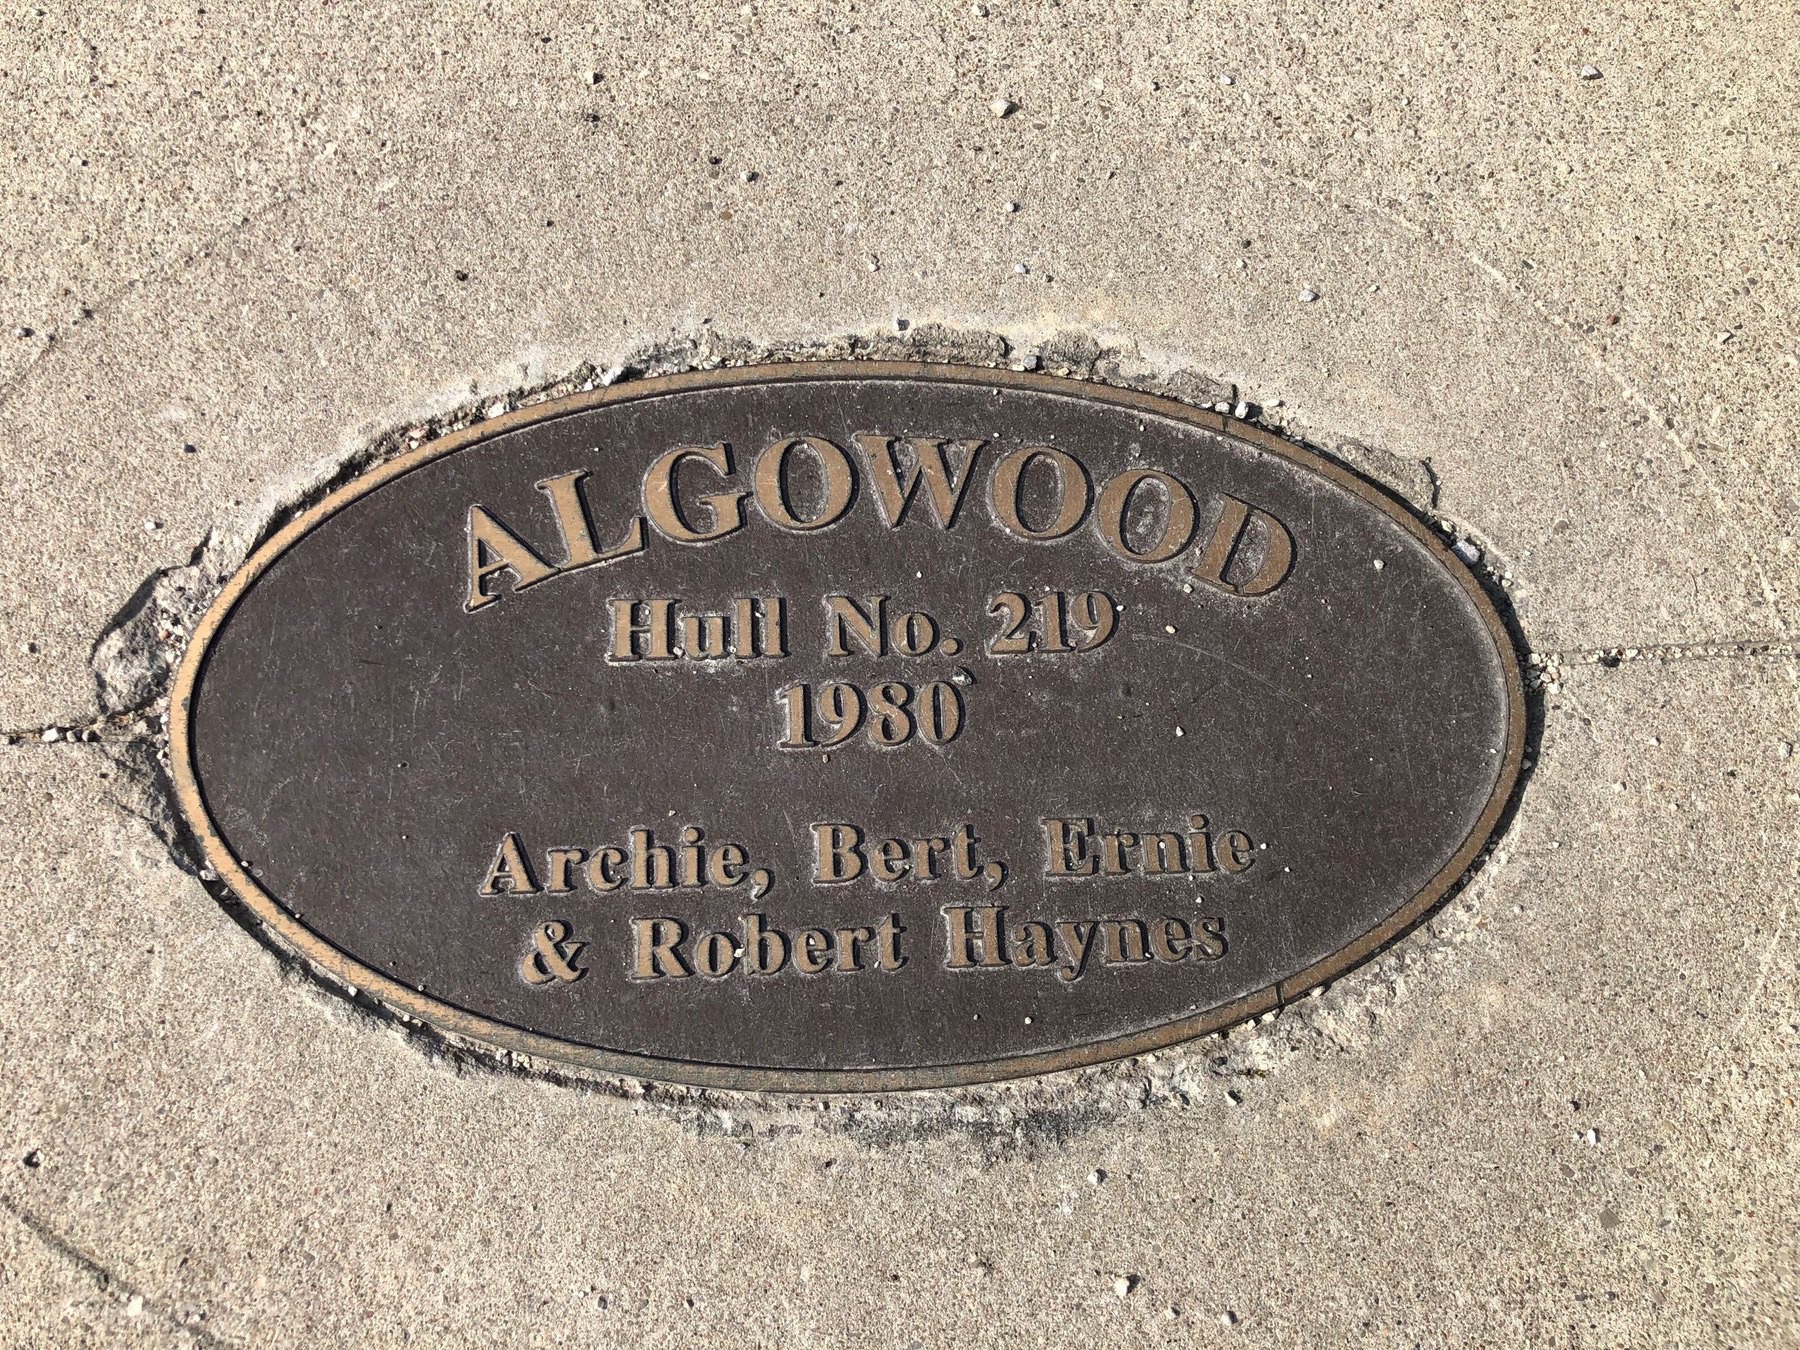 algowood. hull number 219, 1980. Archir, Bert, Ernie and Robert Haynes